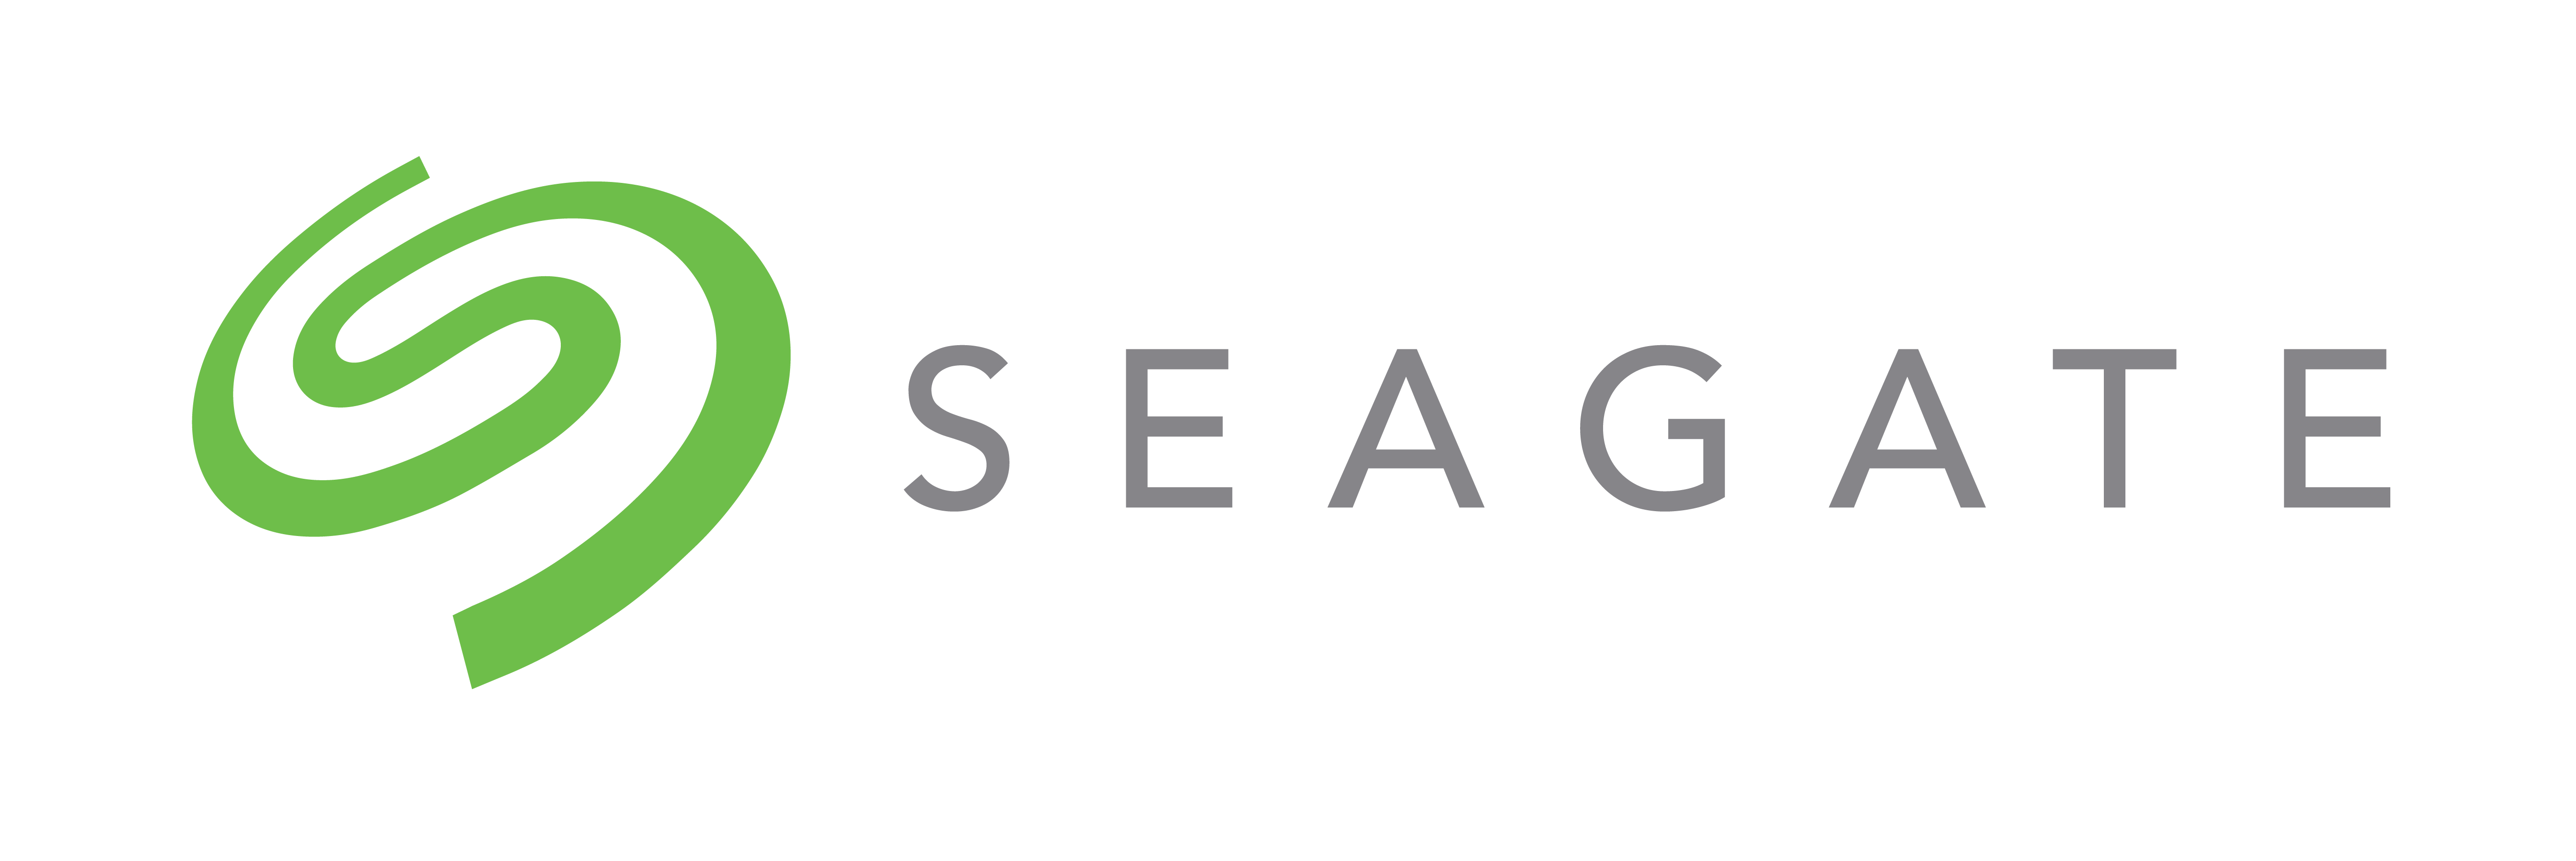 Жёсткие диски Seagate